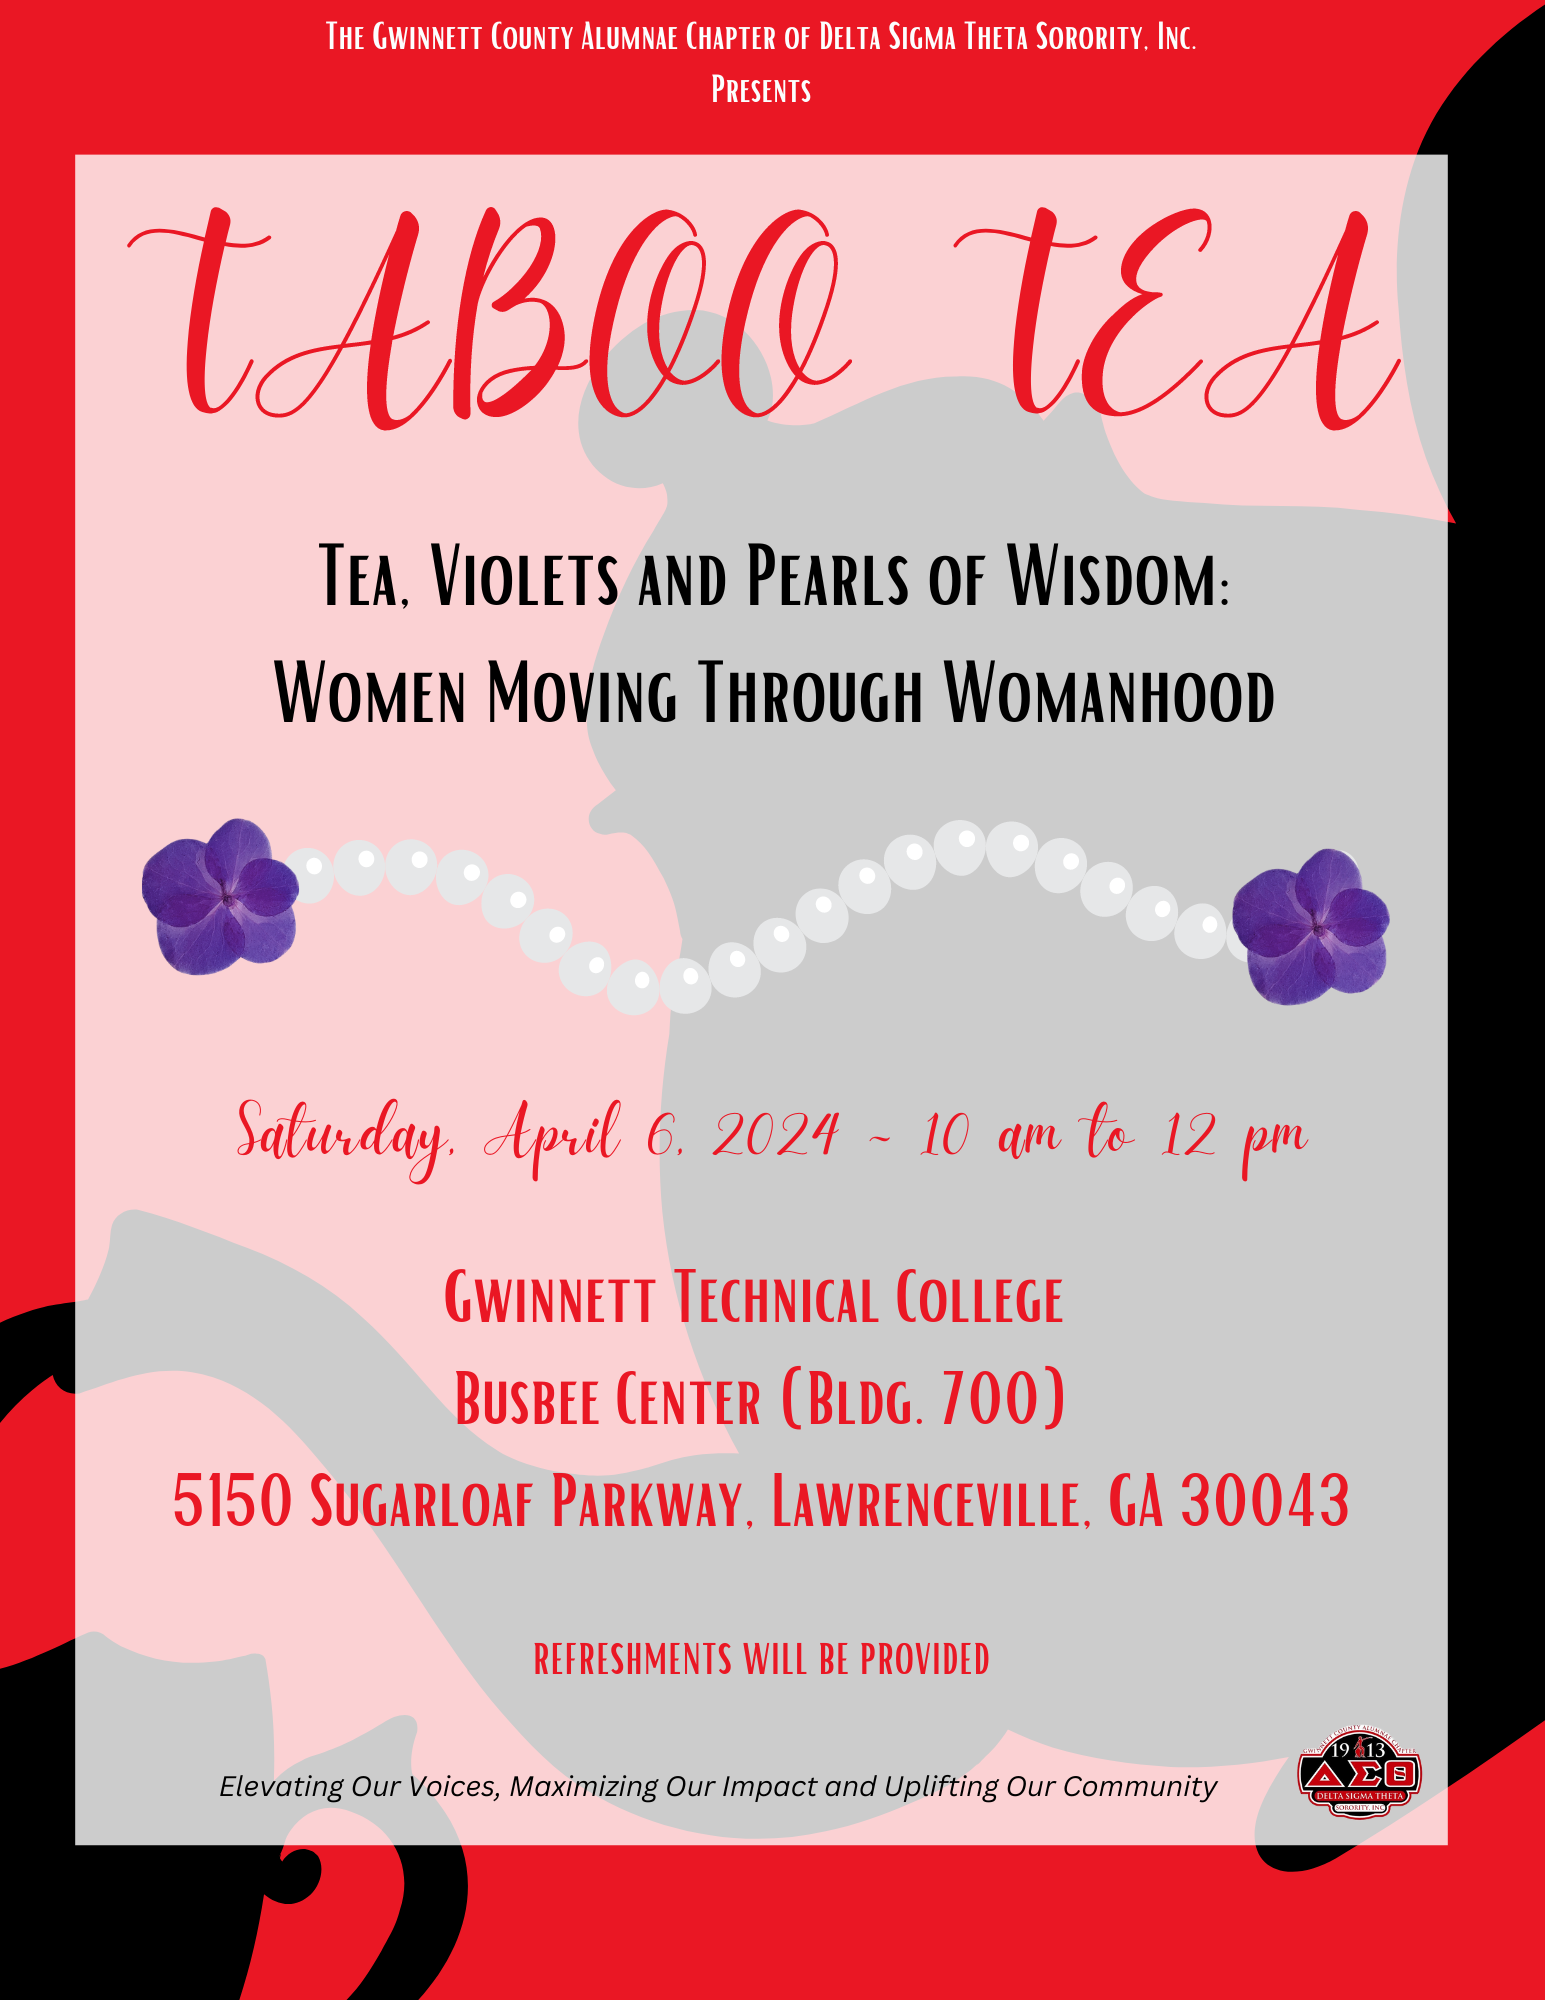 GCAC Taboo Tea @ Gwinnett Technical College, Busbee Center (Bldg 700)